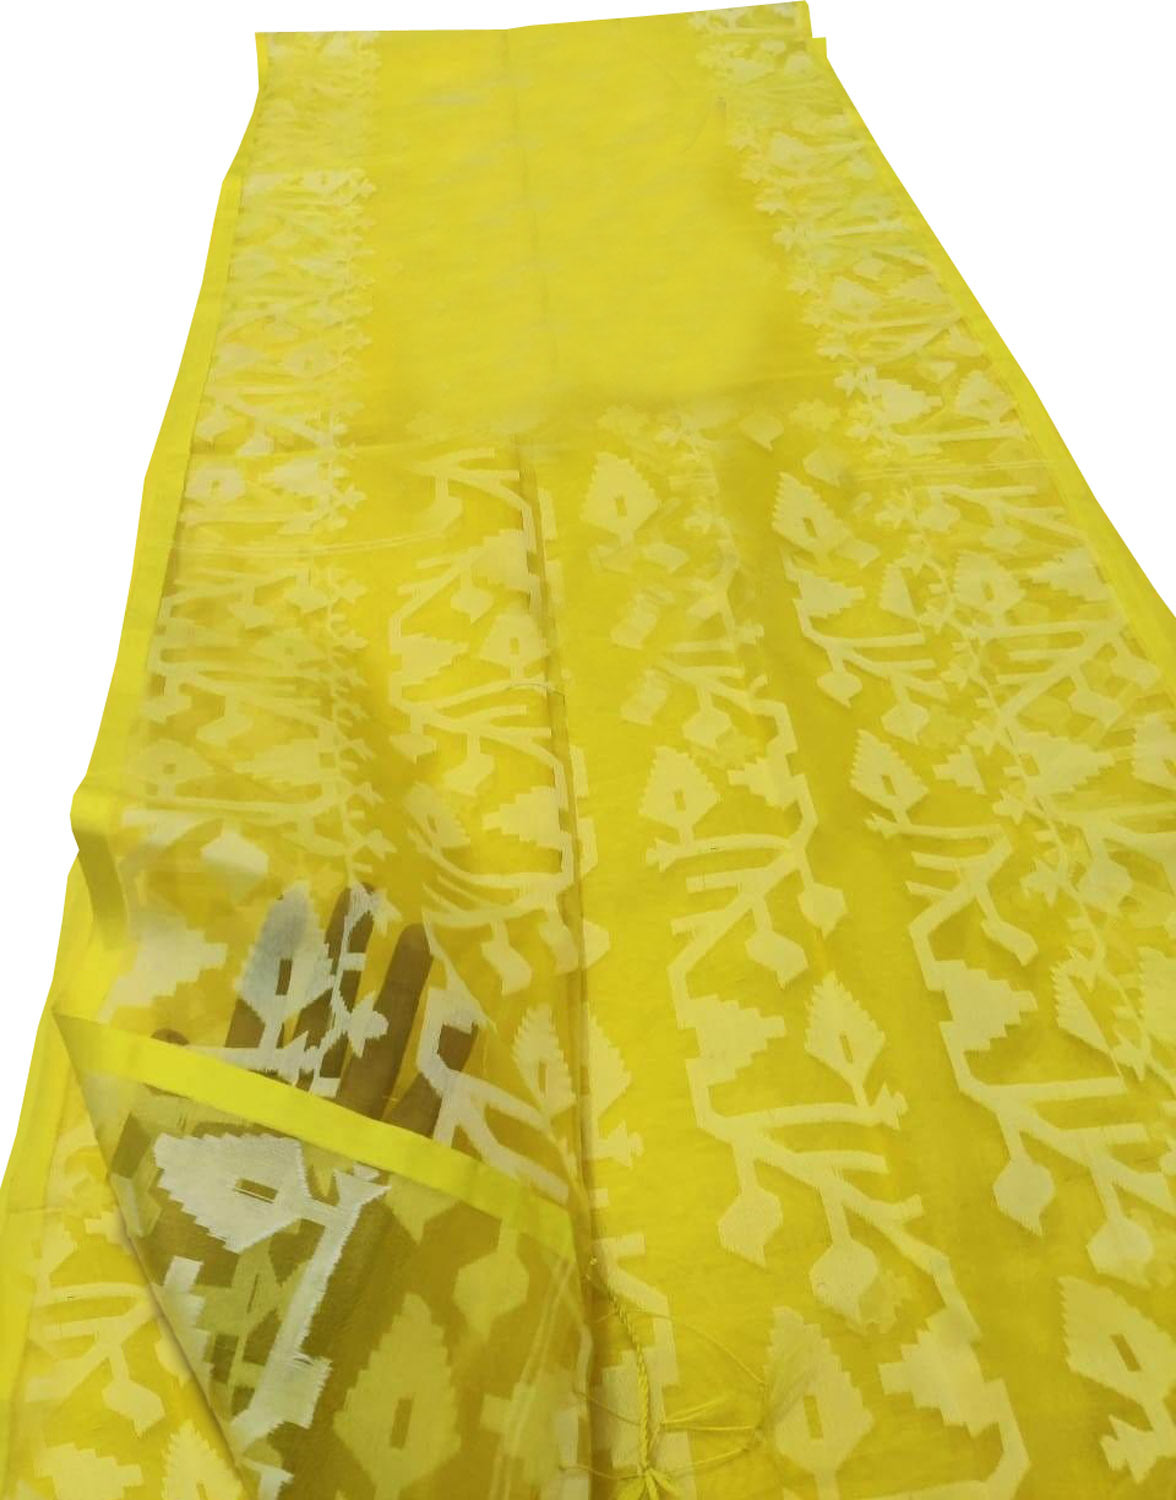 Exquisite Yellow Handloom Jamdani Muslin Saree - Perfect for Any Occasion - Luxurion World